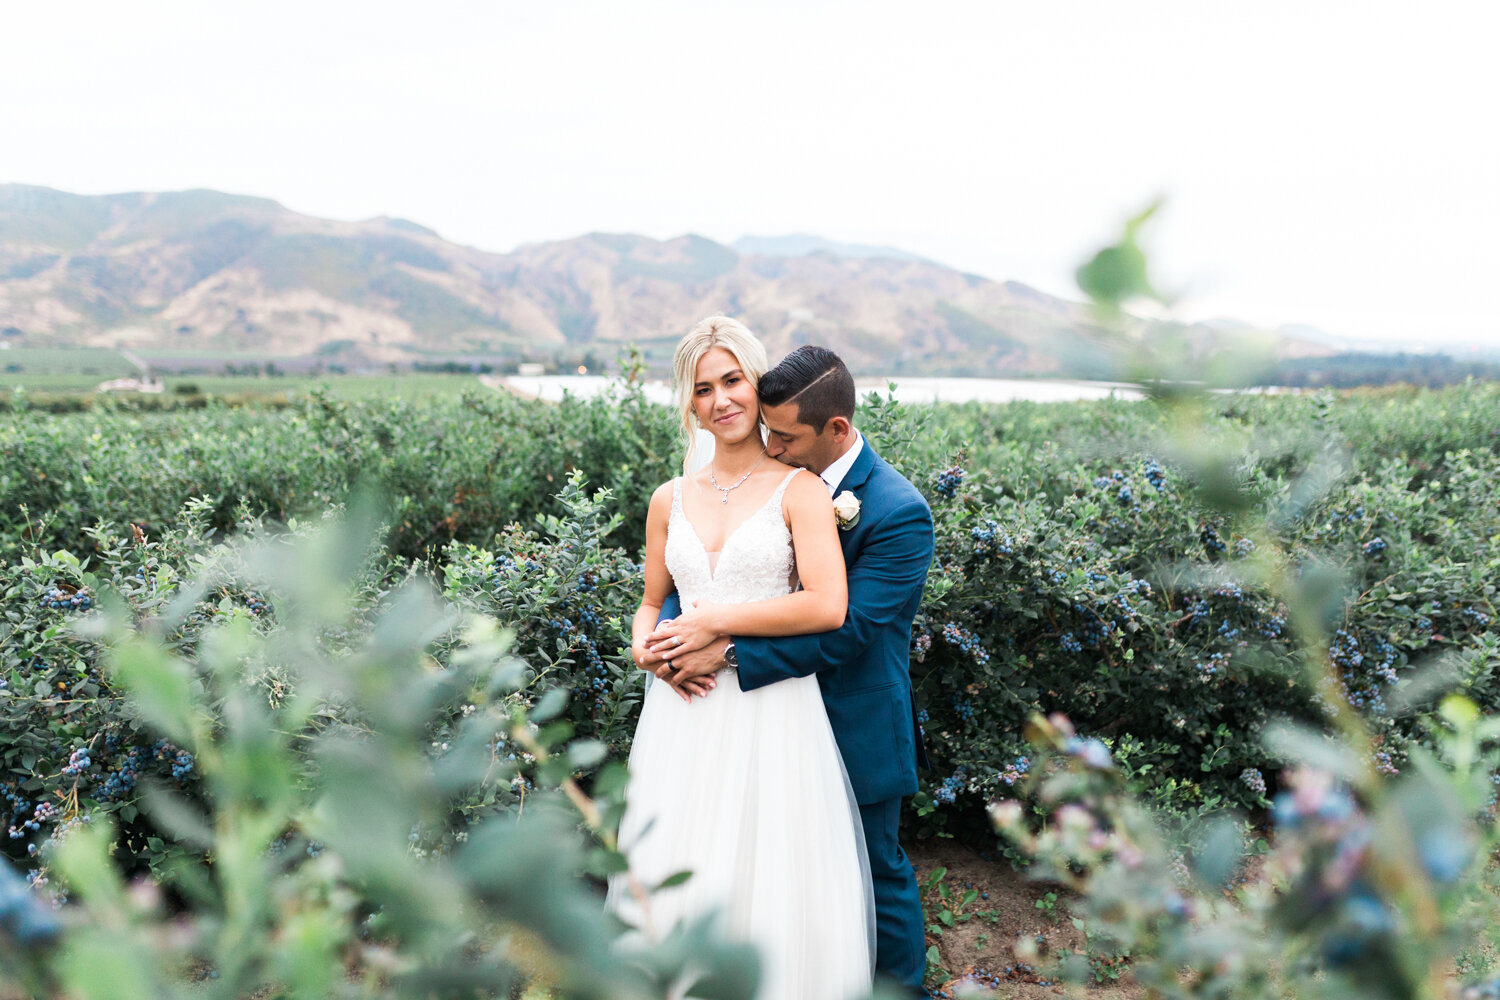 wisteria-photography.com | Wisteria Photography | Gerry Ranch | Weddings Engagement | Southern California Photographer-49.jpg